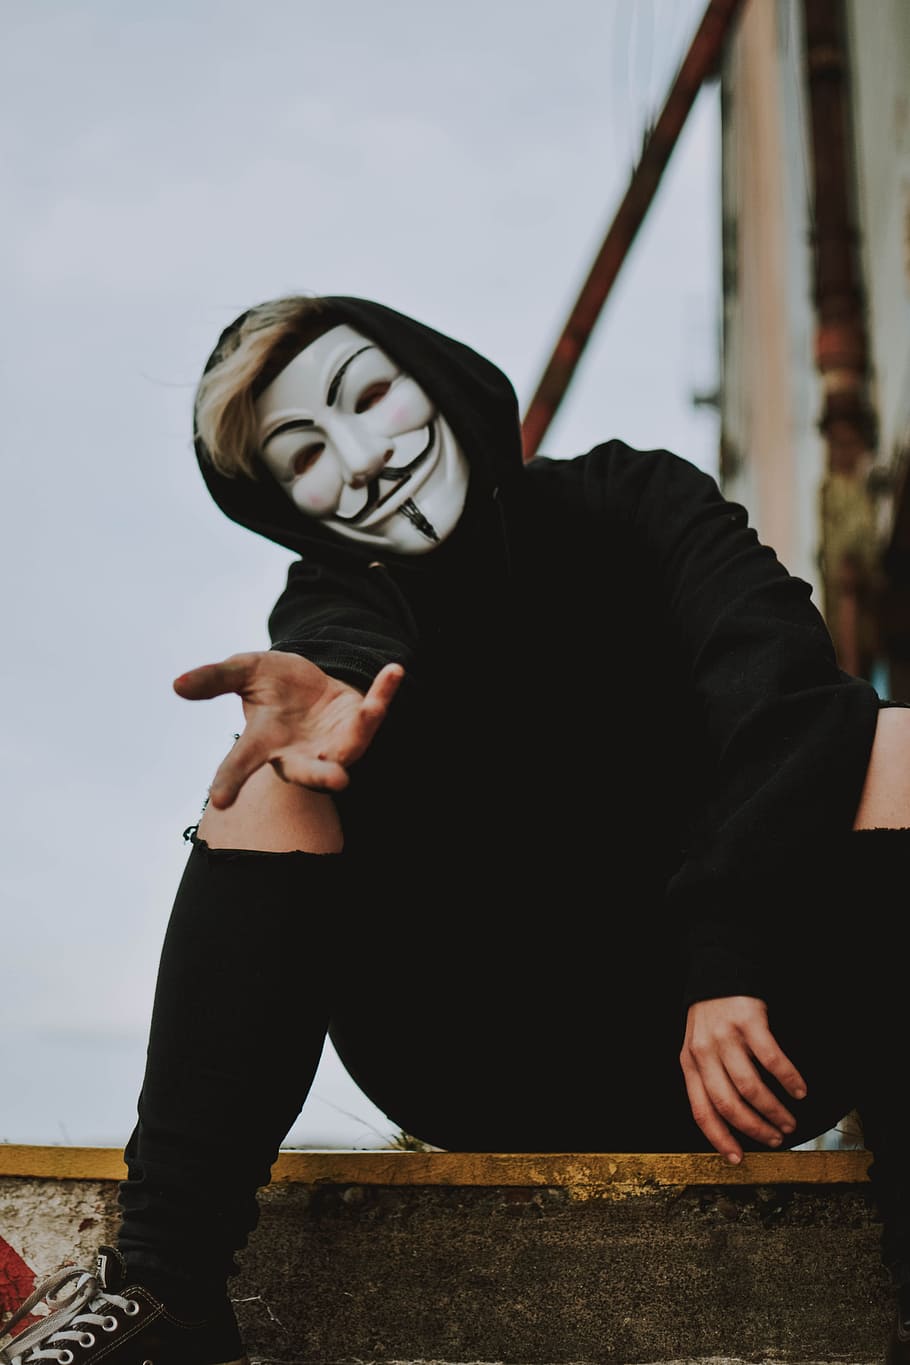 person wearing Guy Fawkes mask, vibe, city, urban, sitting, creepy